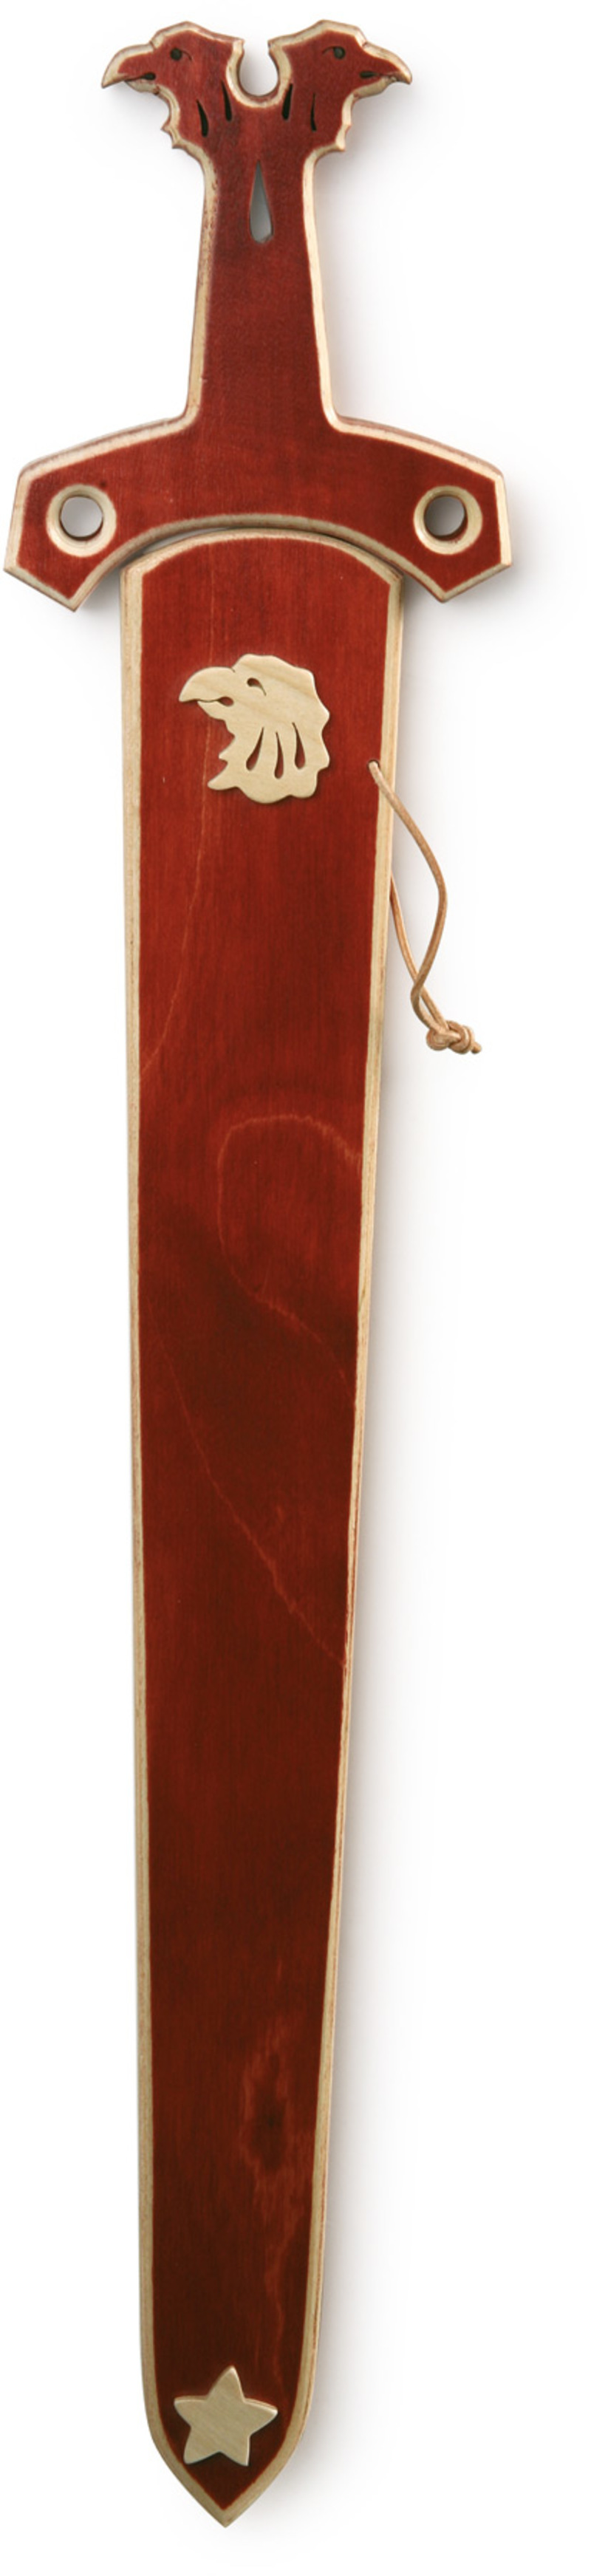 Wooden Sword, Falcon Star